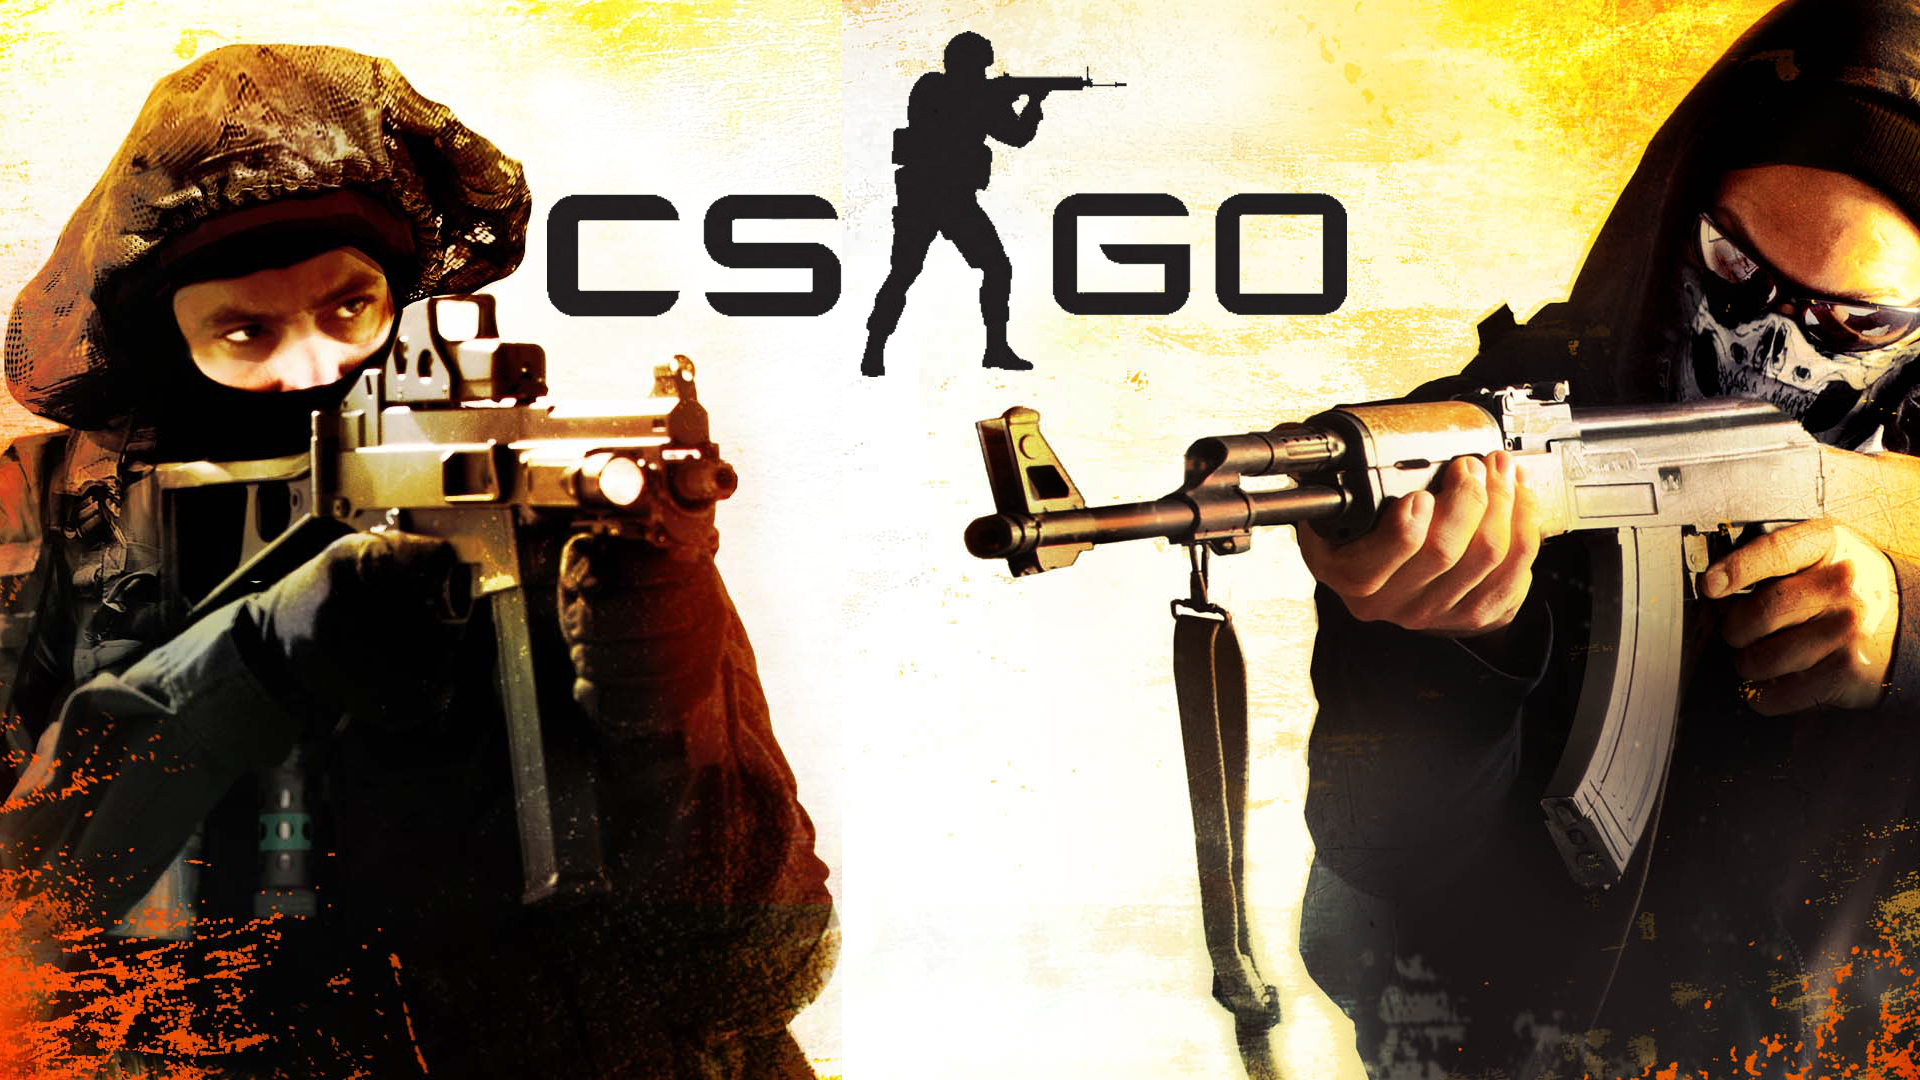 General 1920x1080 Counter-Strike Counter-Strike: Global Offensive video games PC gaming machine gun weapon men